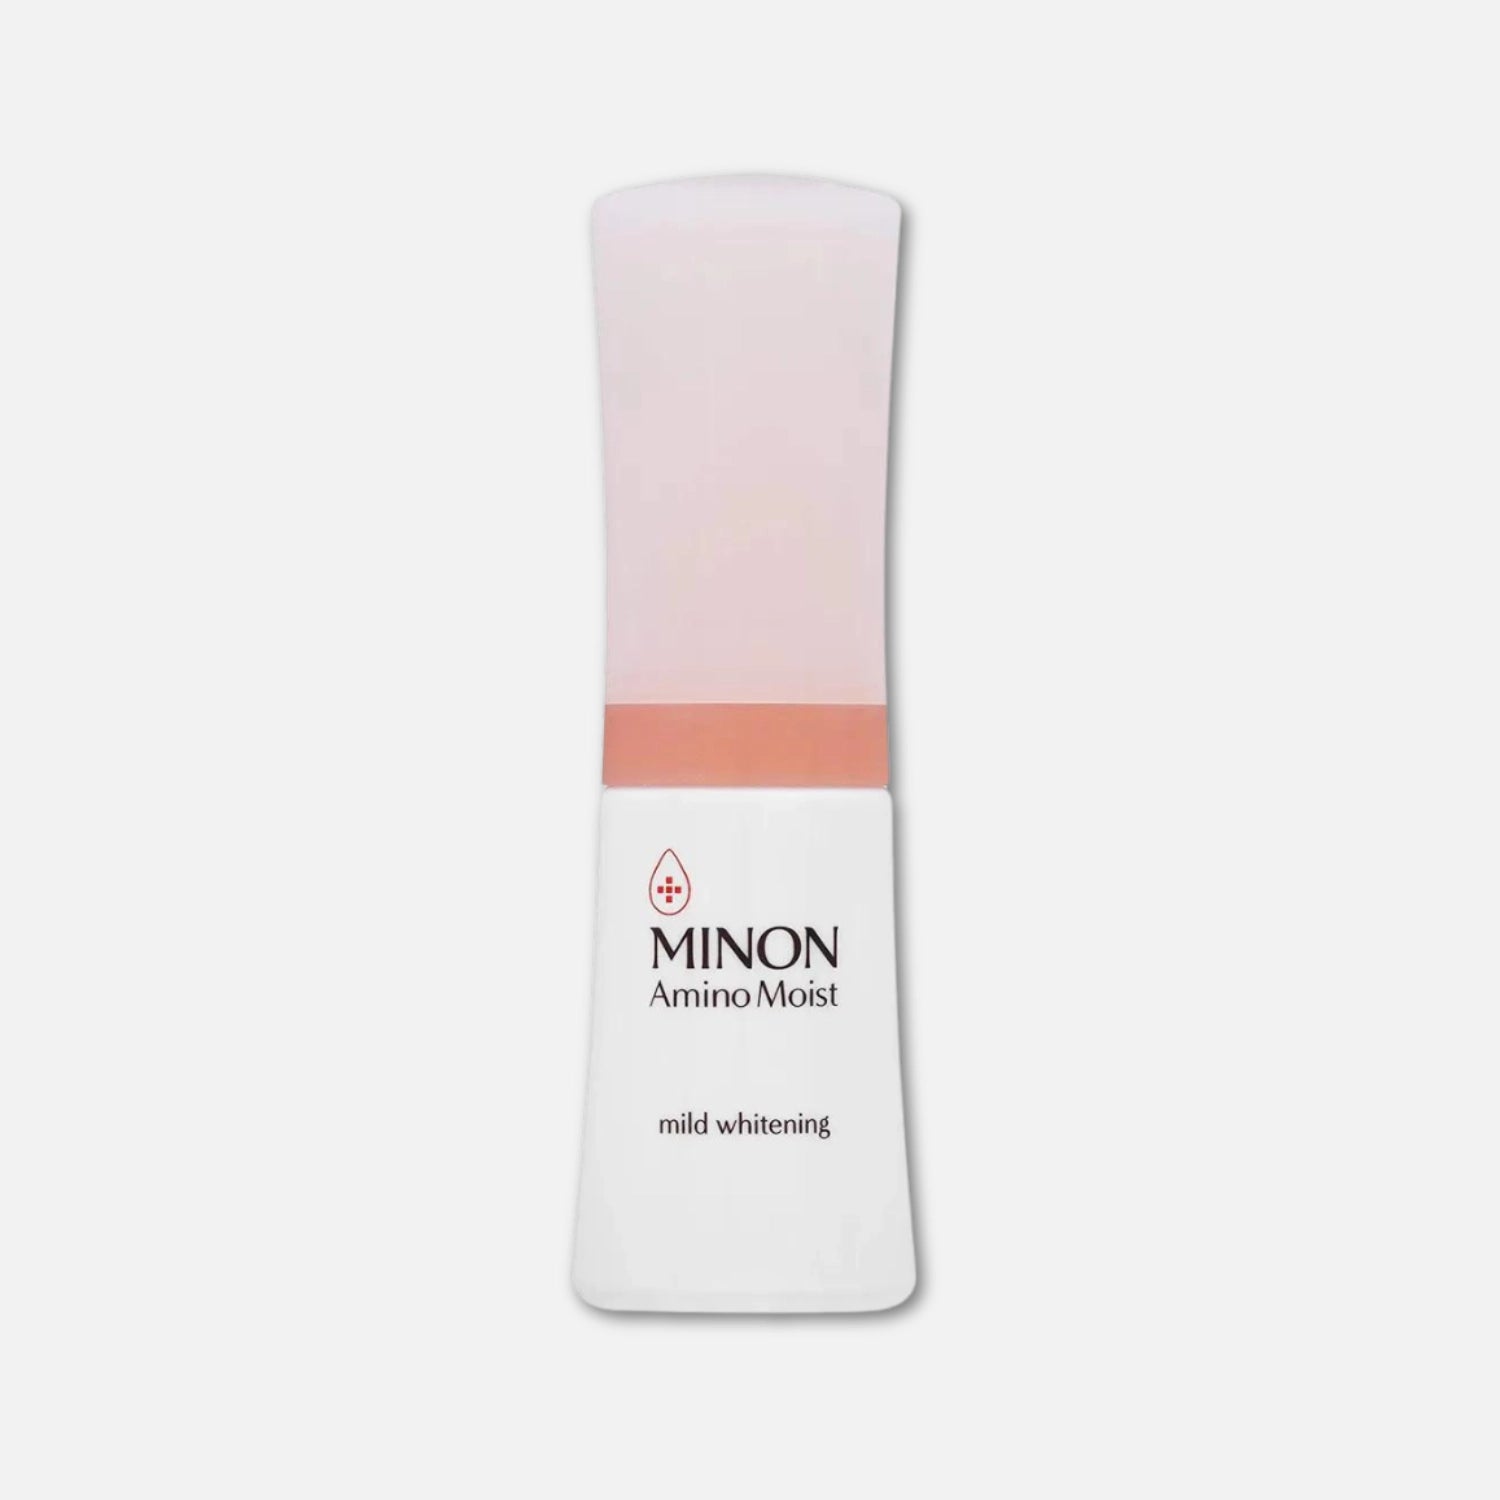 Minon Amino Moist Mild Whitening Serum 30g